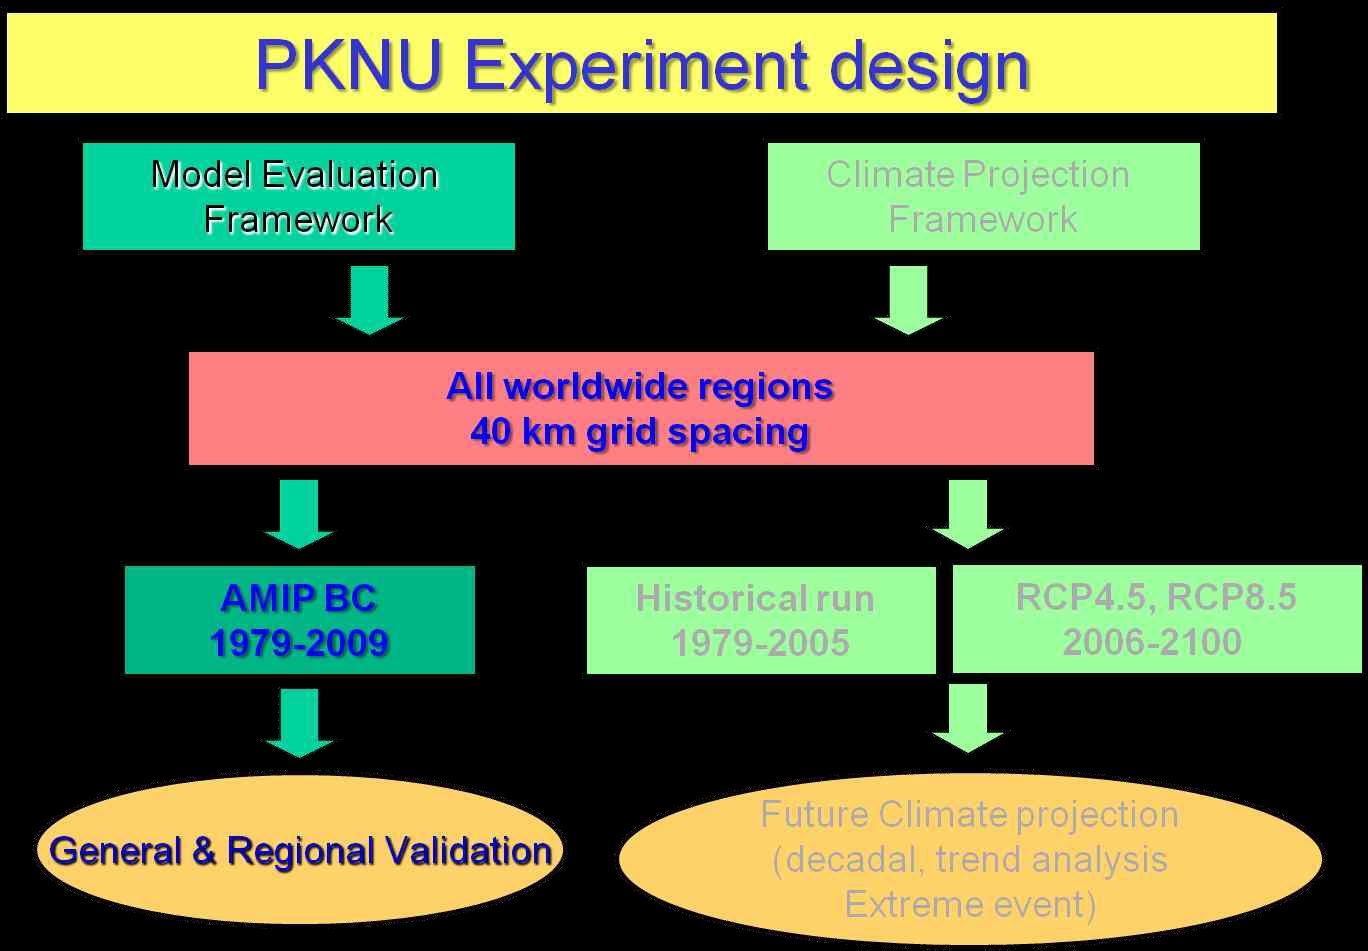 PKNU Experiment design for model evaluation